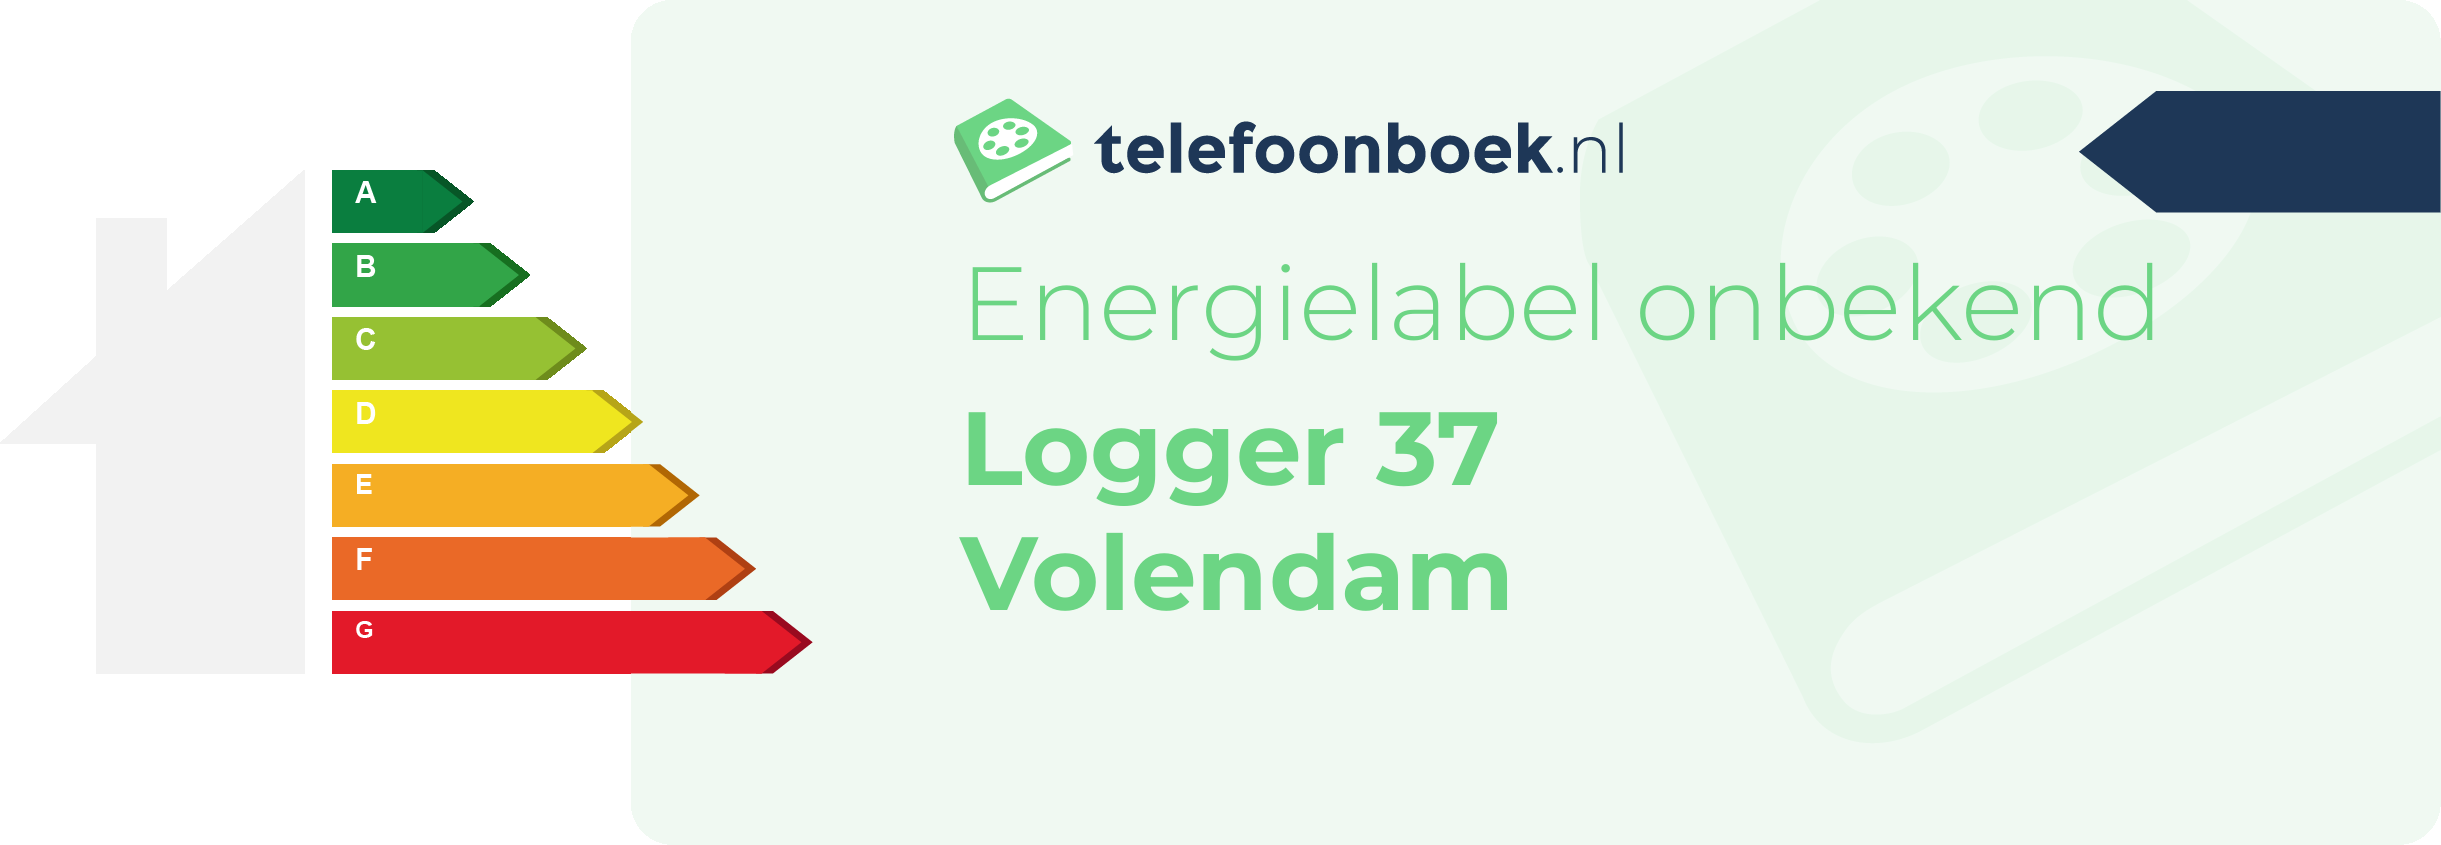 Energielabel Logger 37 Volendam